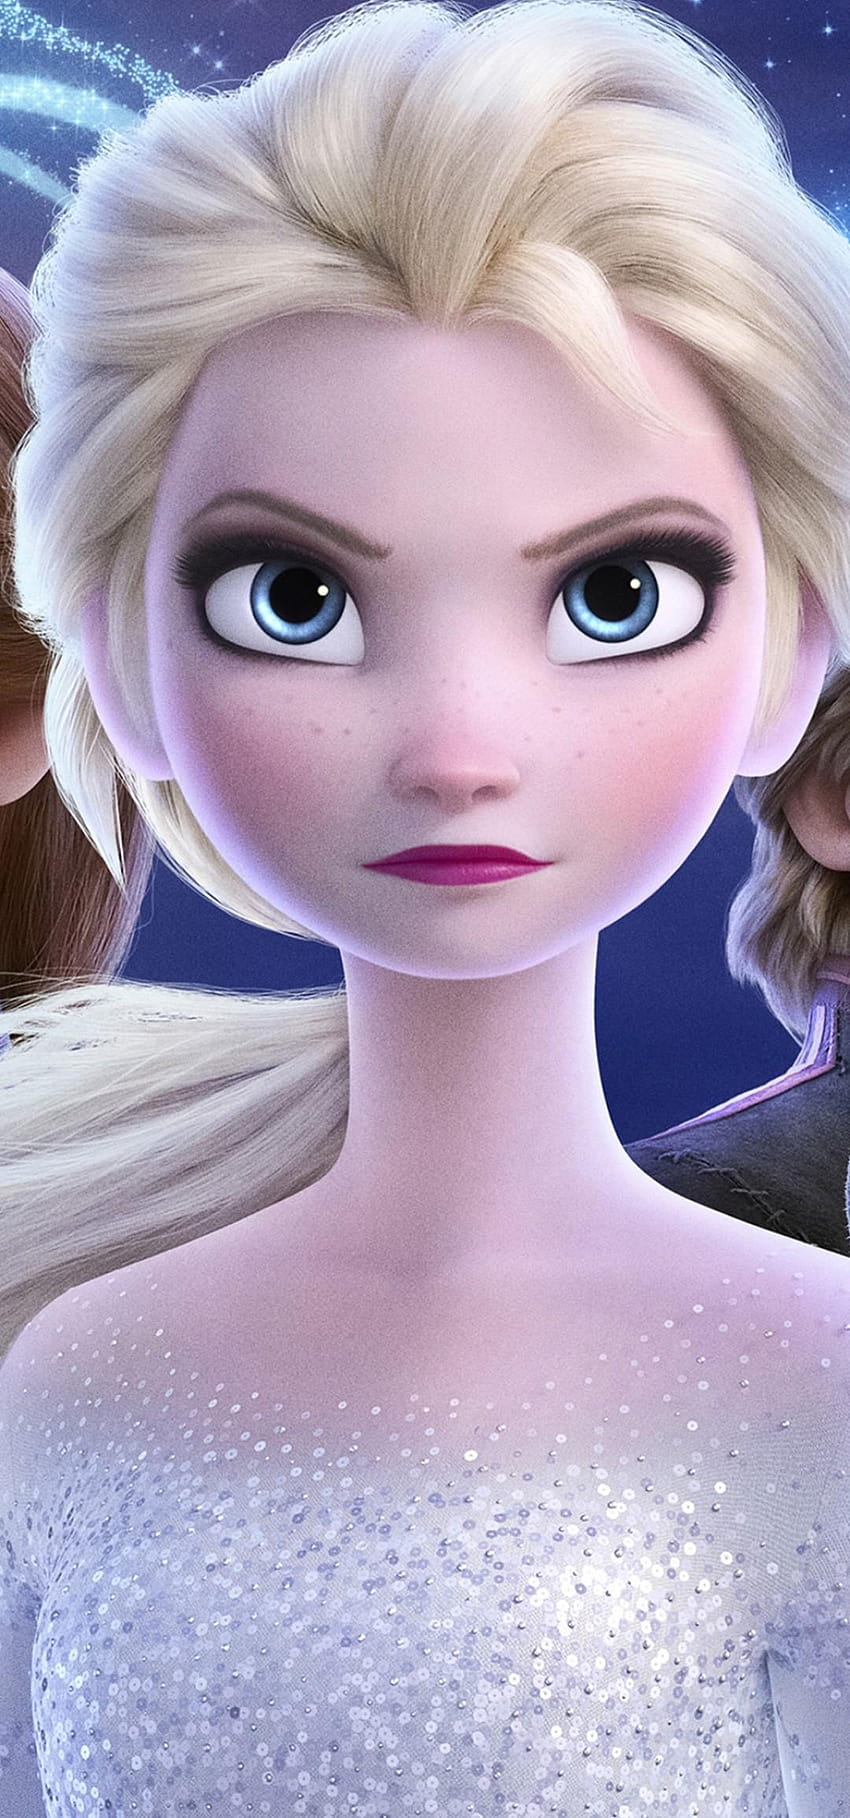 1080x2310 Frozen 2, Queen Elsa, Animation, Anna, frozen 2 queen ...